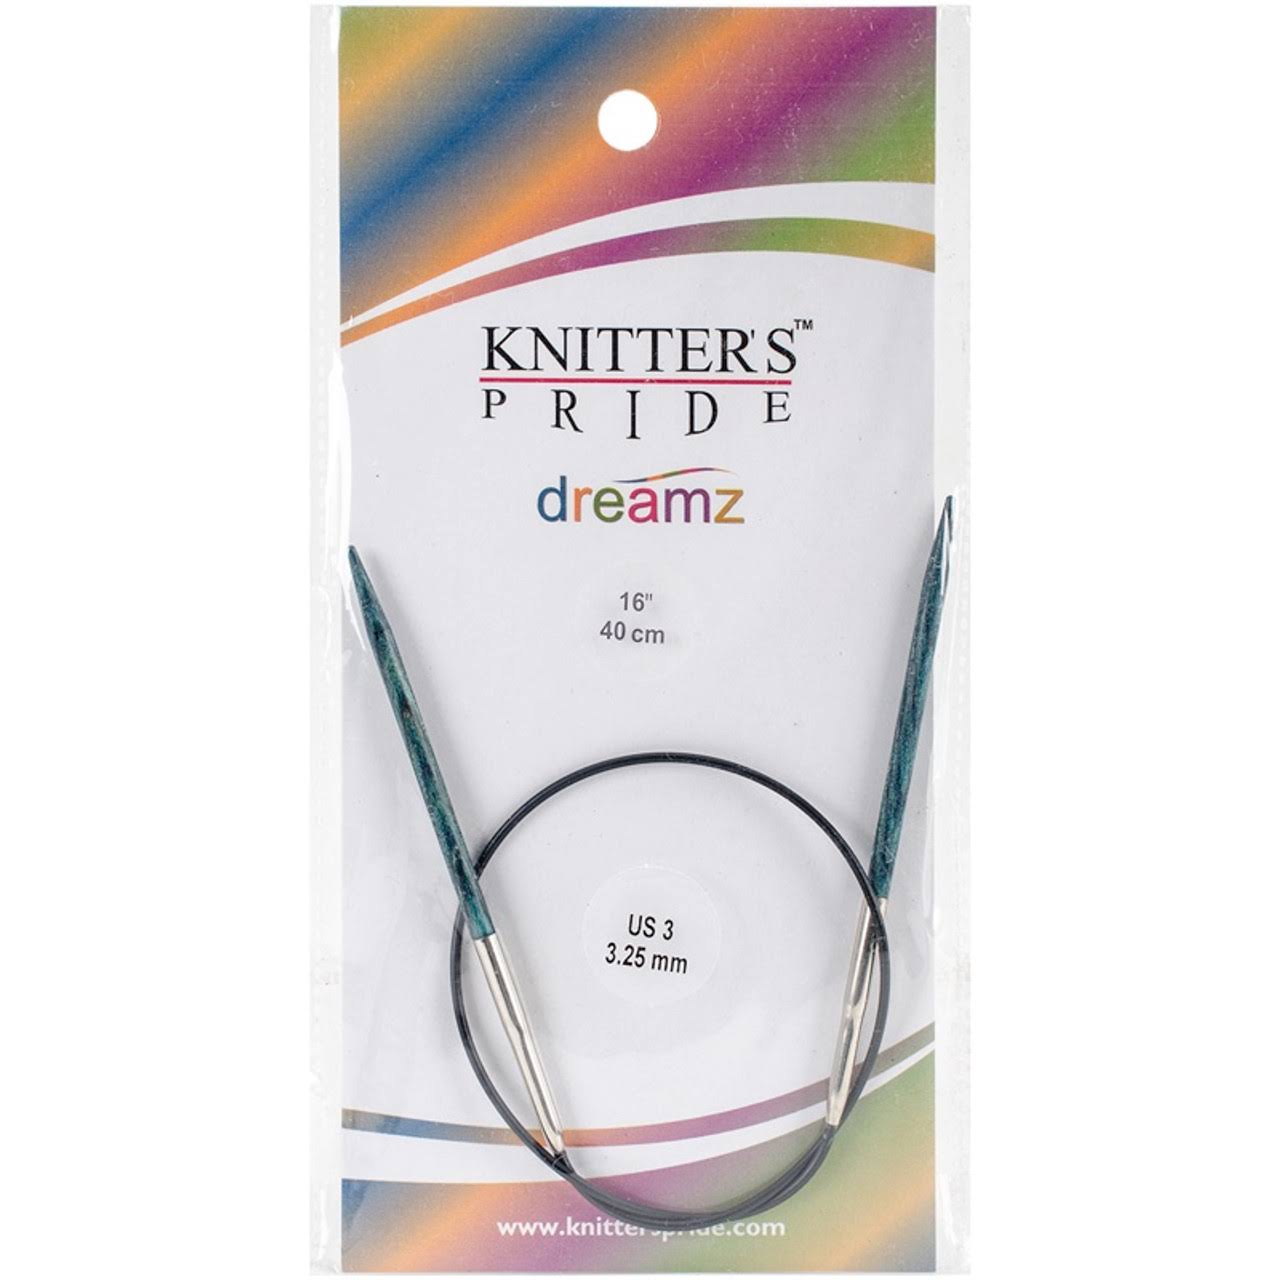 Knitters Pride Dreamz Circular Knitting Needles - 16", 3.25mm